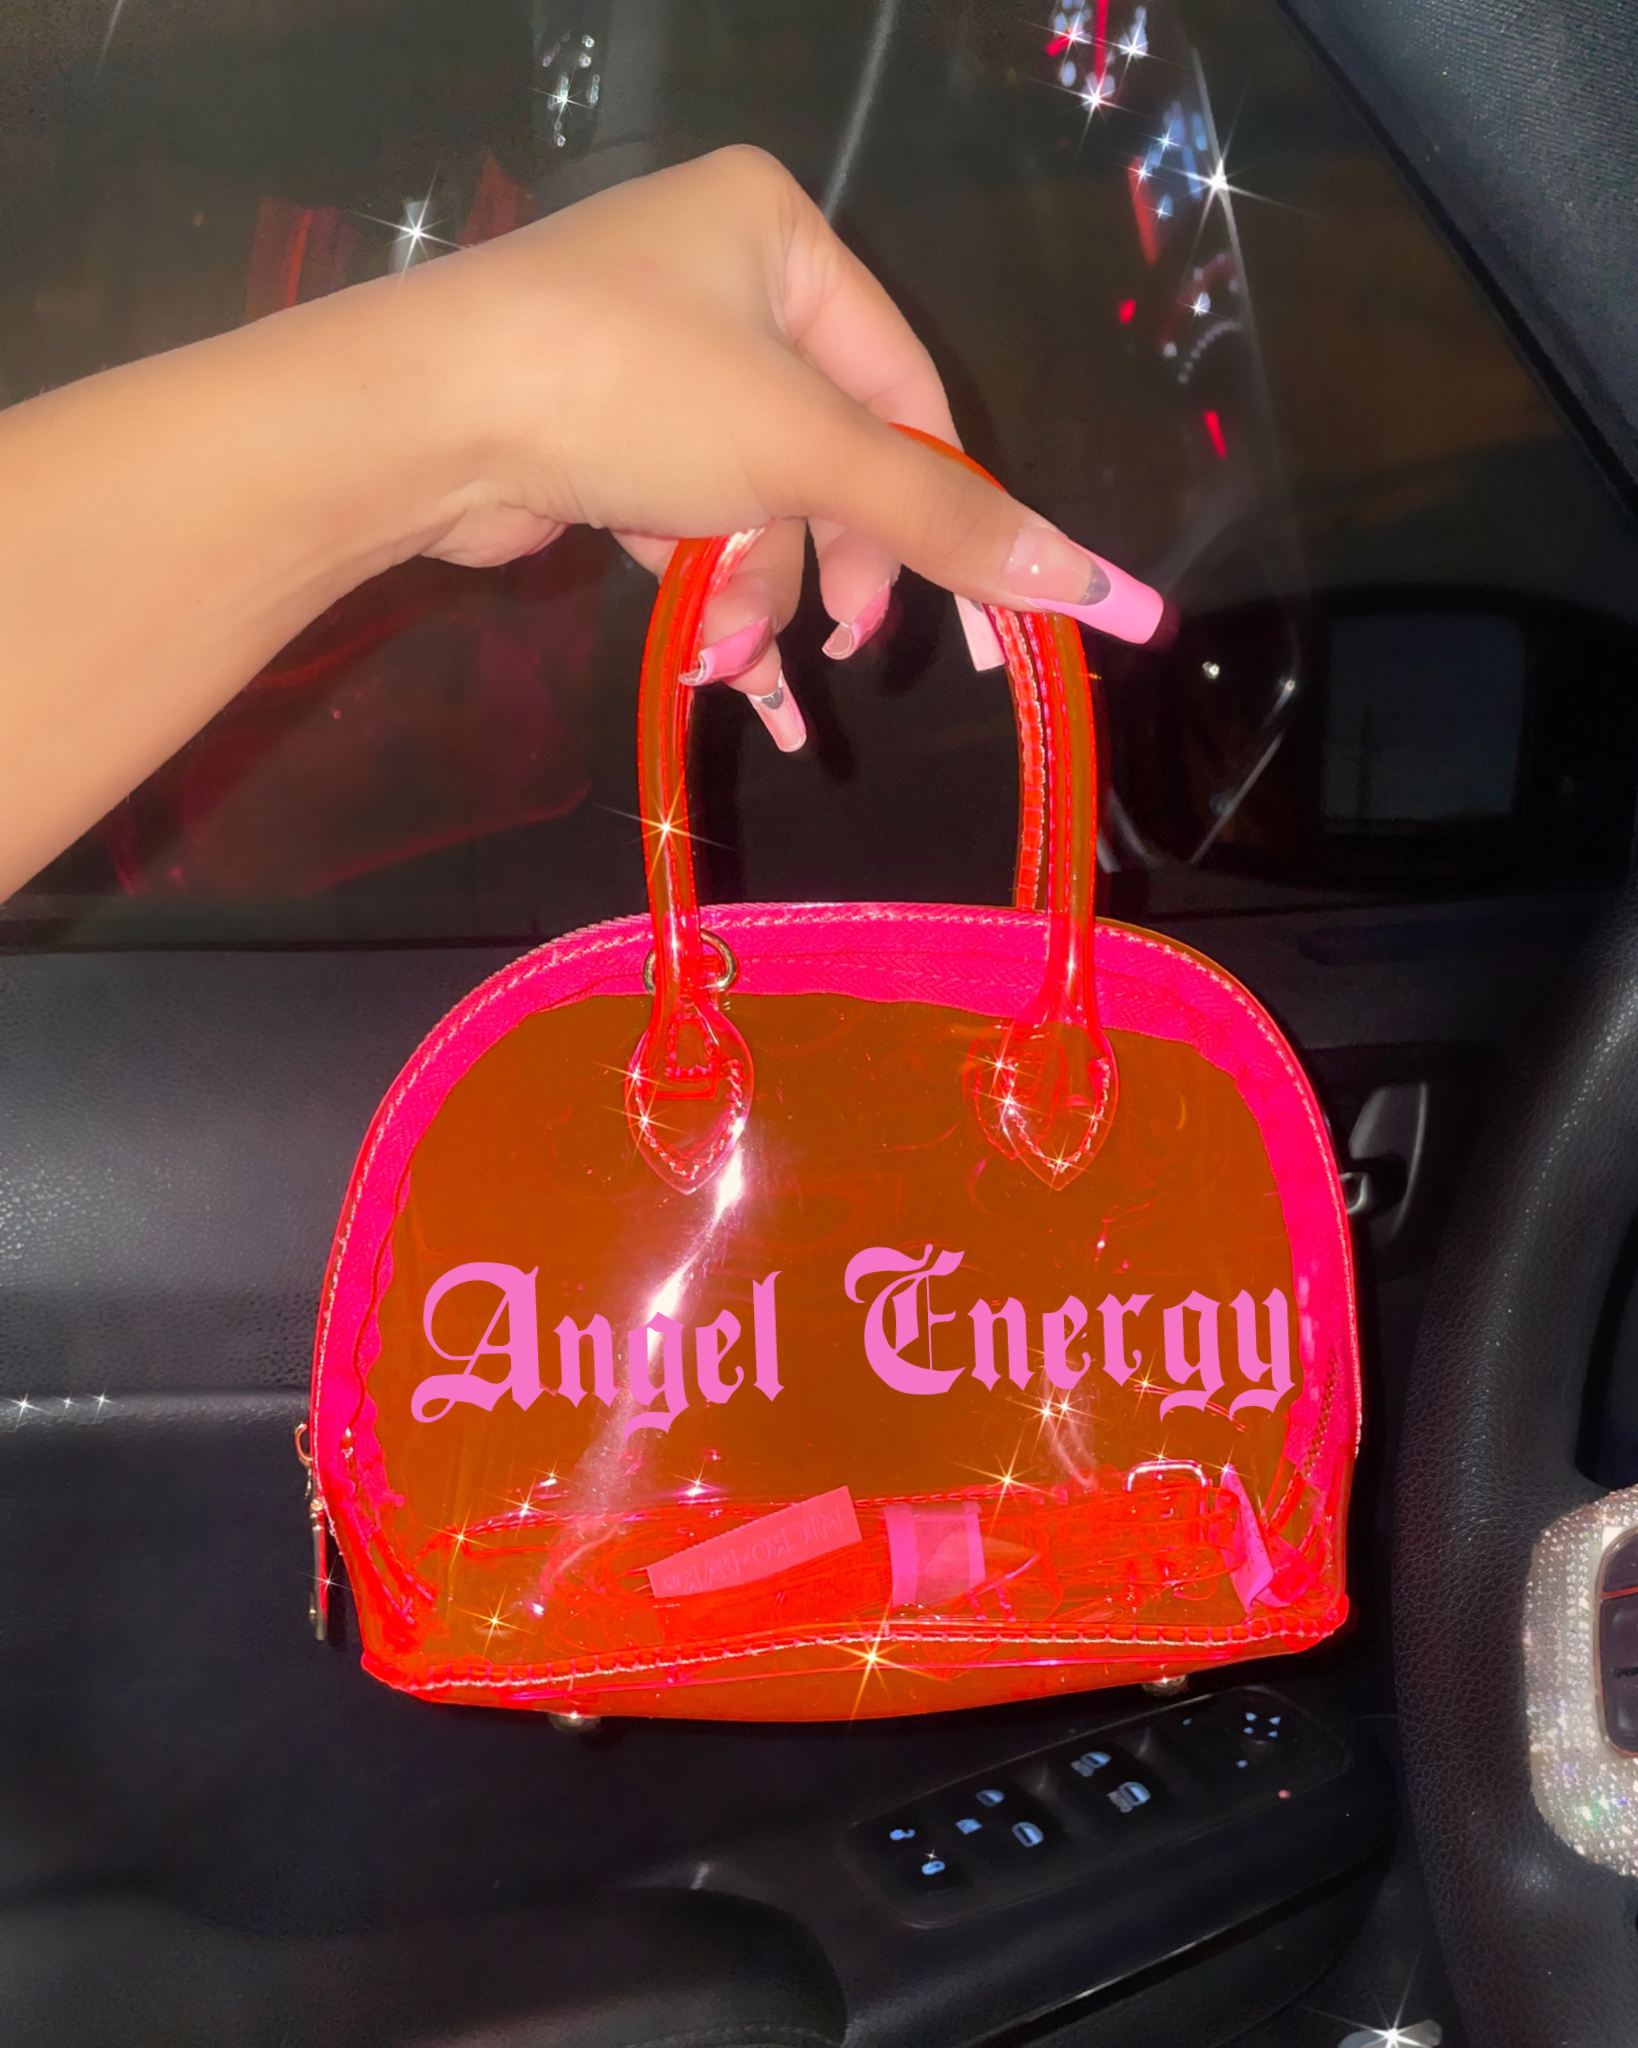 Gold LV Luxury Jelly Crossbody Bag